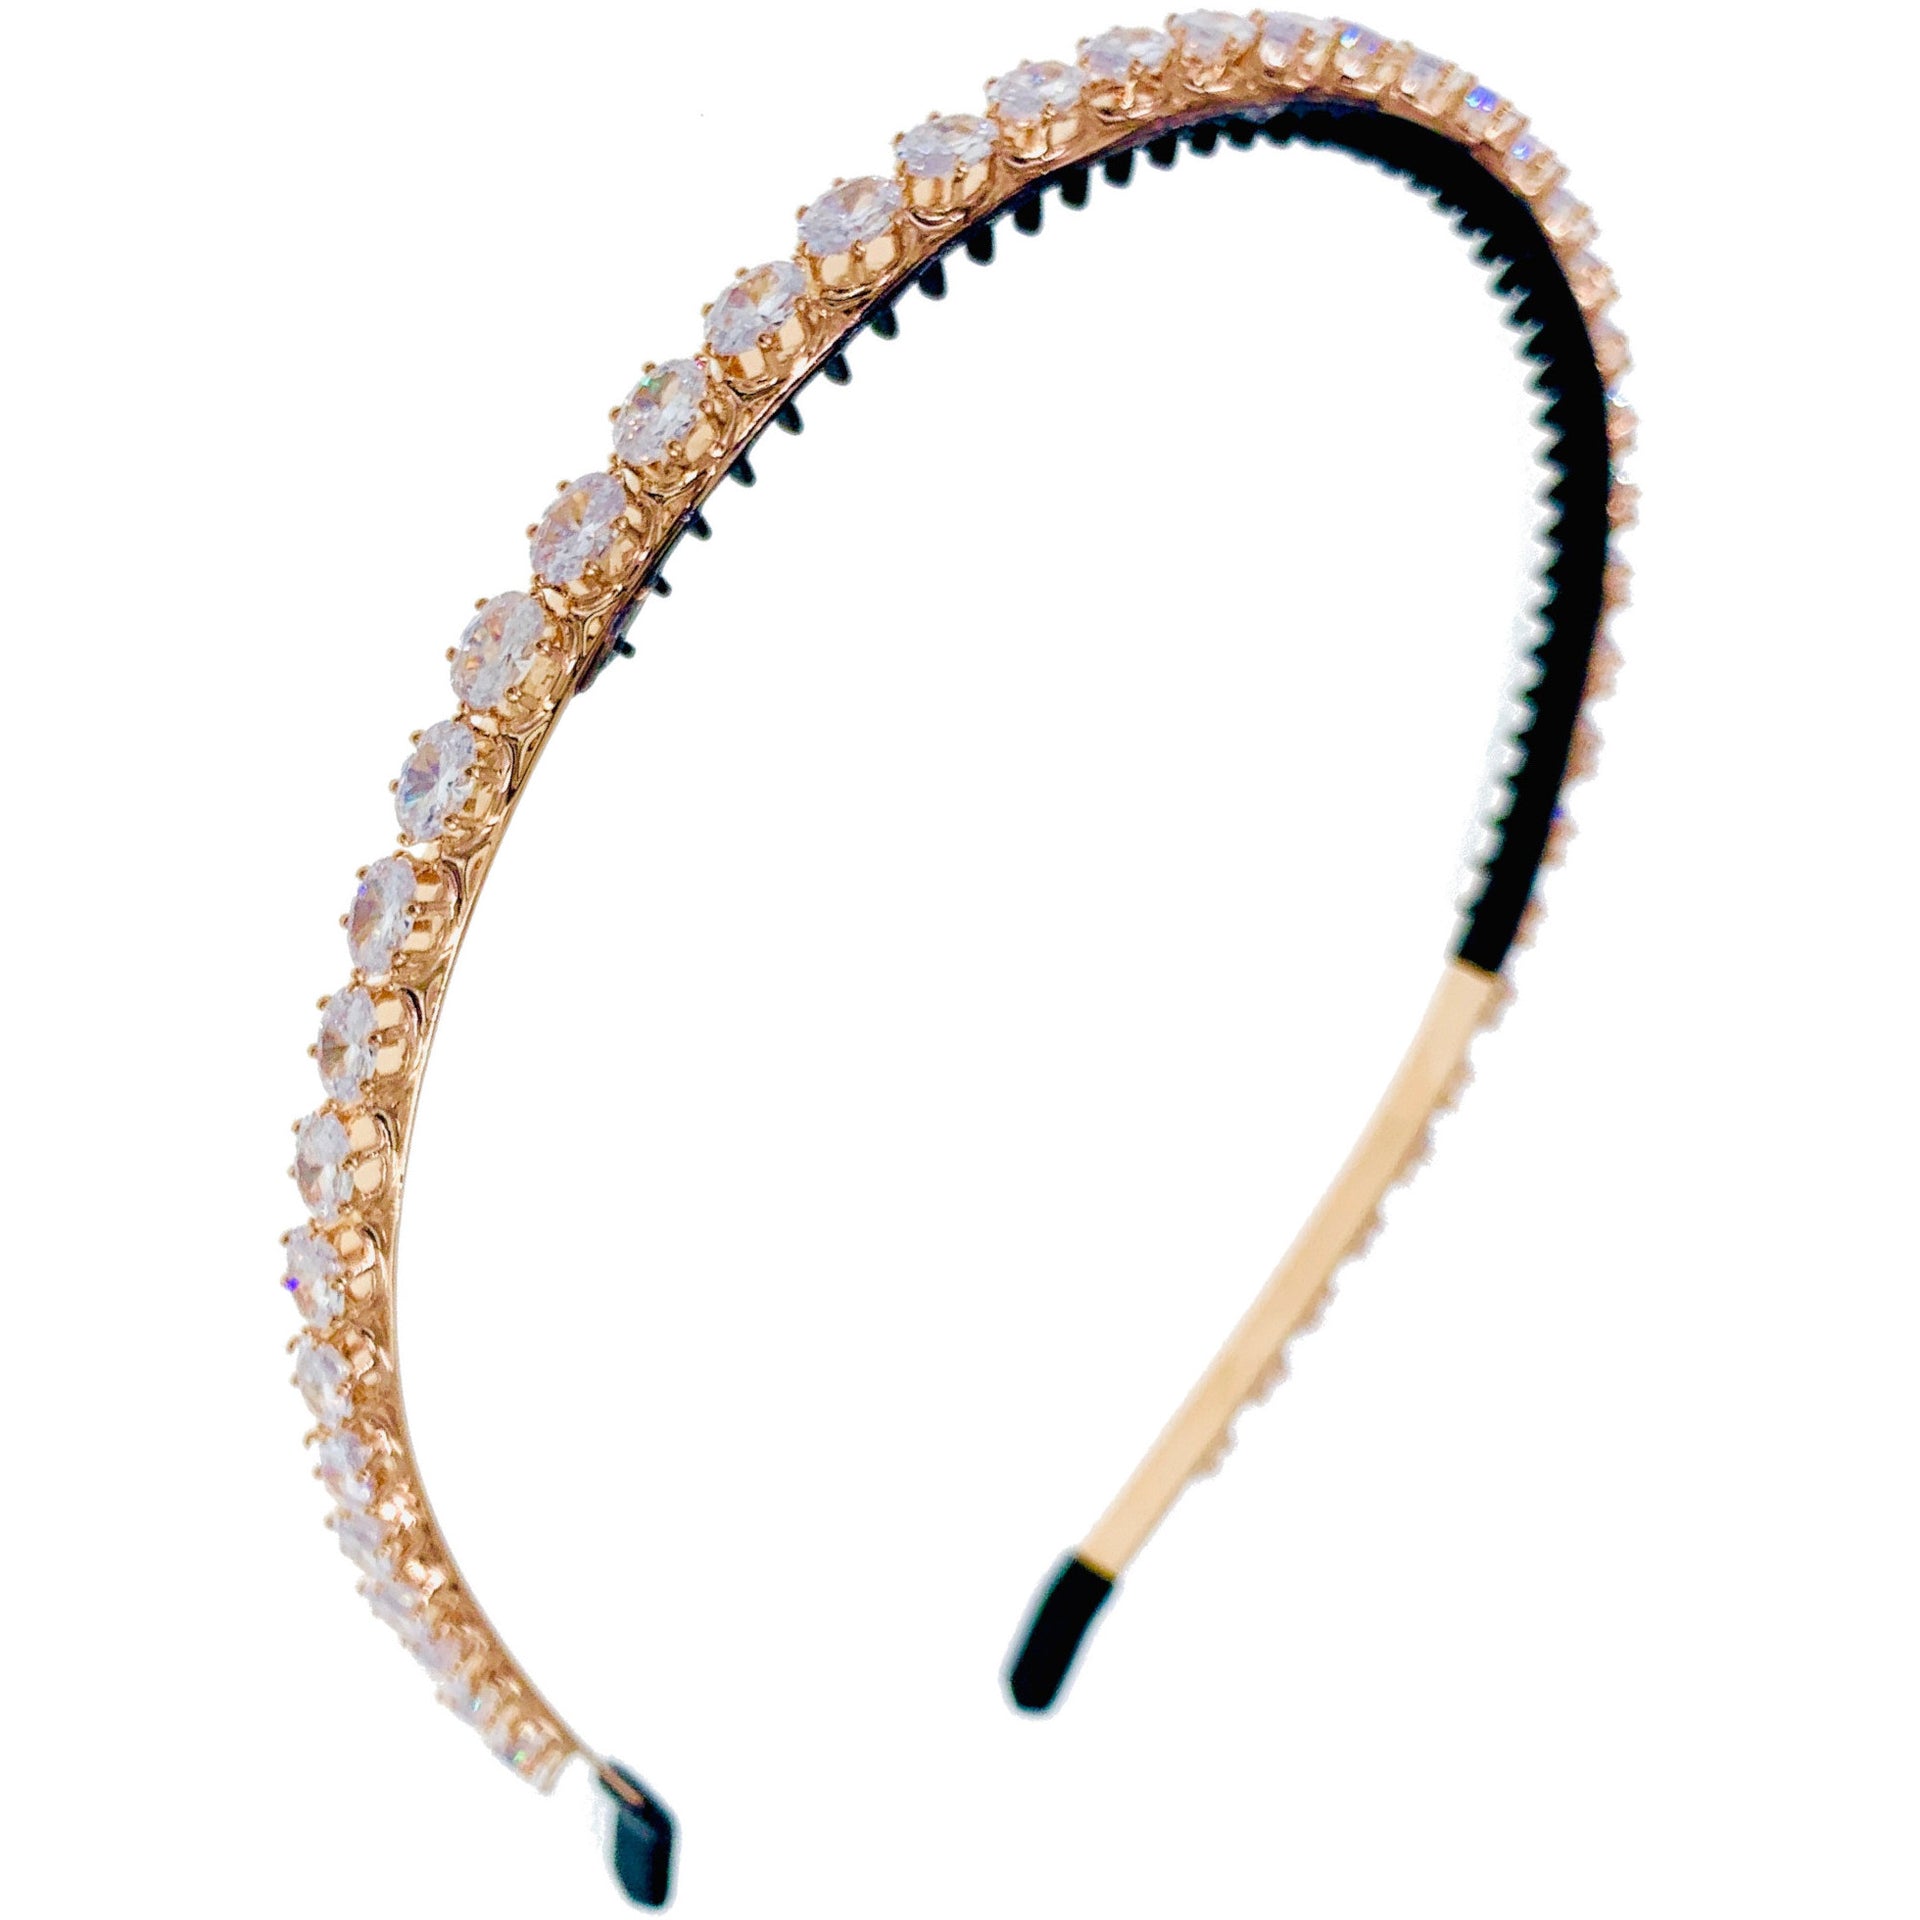 Charline Glam Leaf Headband Hairband use Cubic Zirconia CZ Crystal Gemstone Emerald Green Sapphire Blue Navy Hot Pink Champagne Rose Gold Silver, Headband - MOGHANT